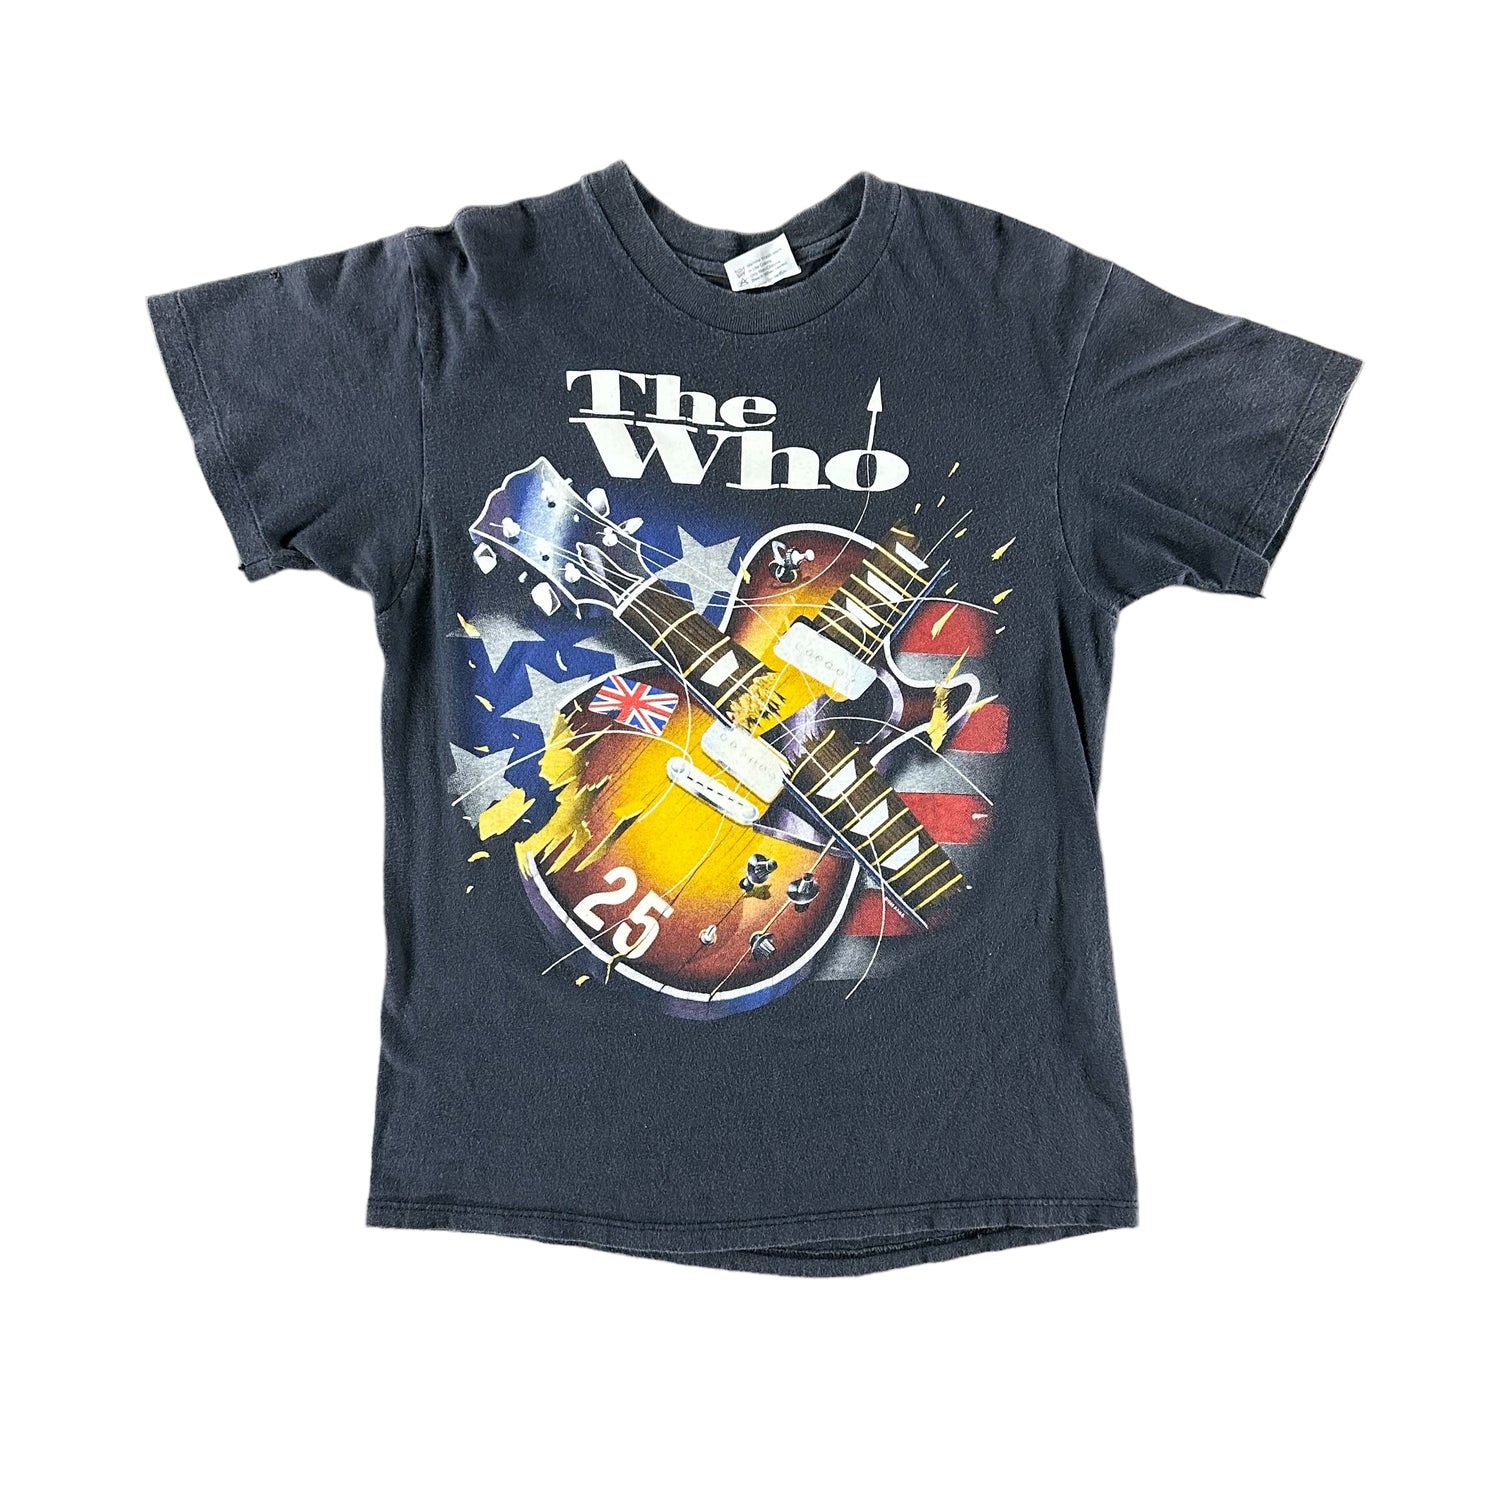 Vintage 1985 The WHO T-shirt size Medium